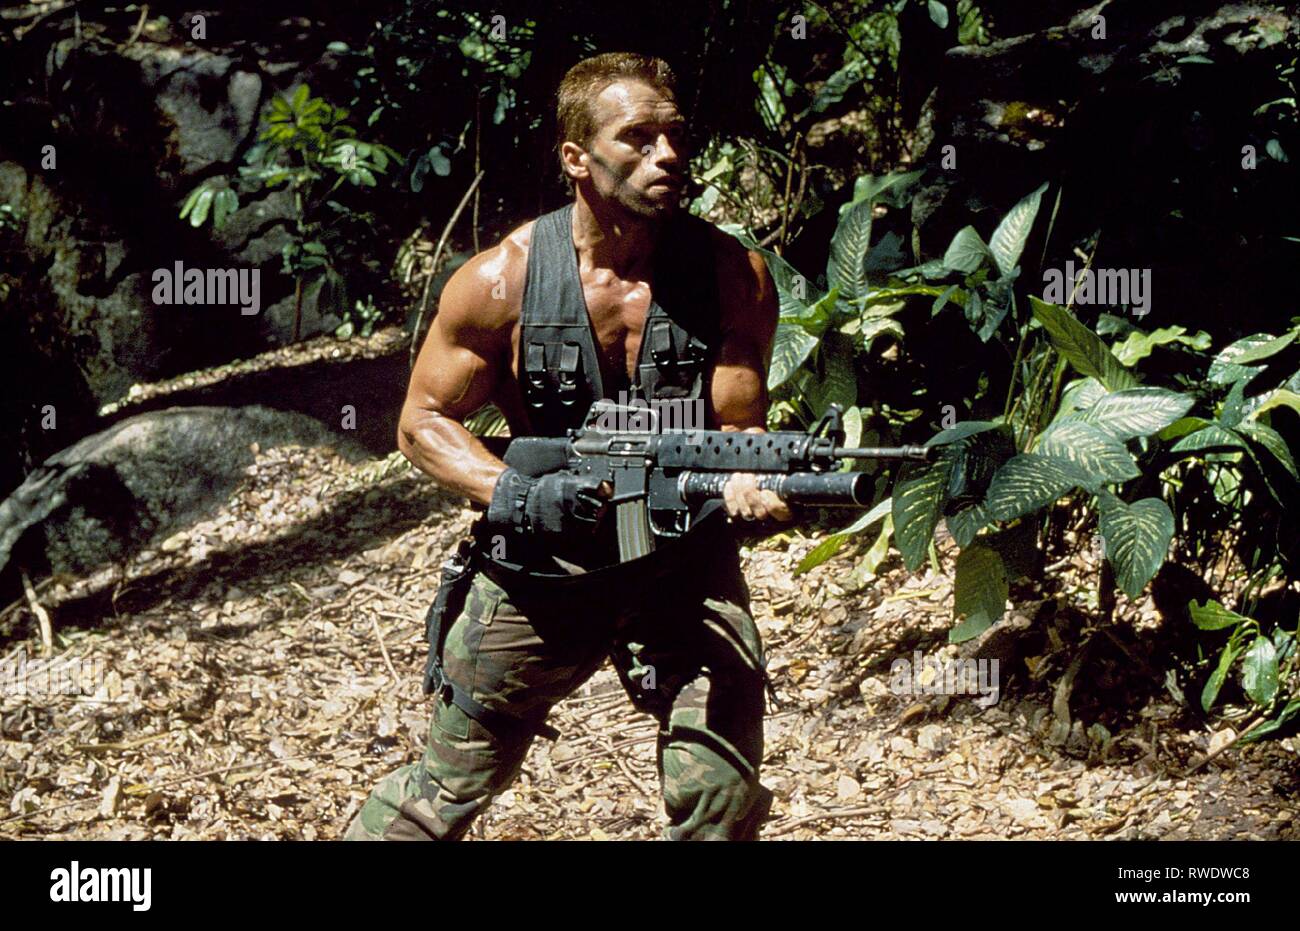 42 Top Photos New Predator Movie With Arnold Schwarzenegger - Arnold Schwarzenegger Will Reprise His Role For Shane Black S New The Predator Movie Rama S Screen